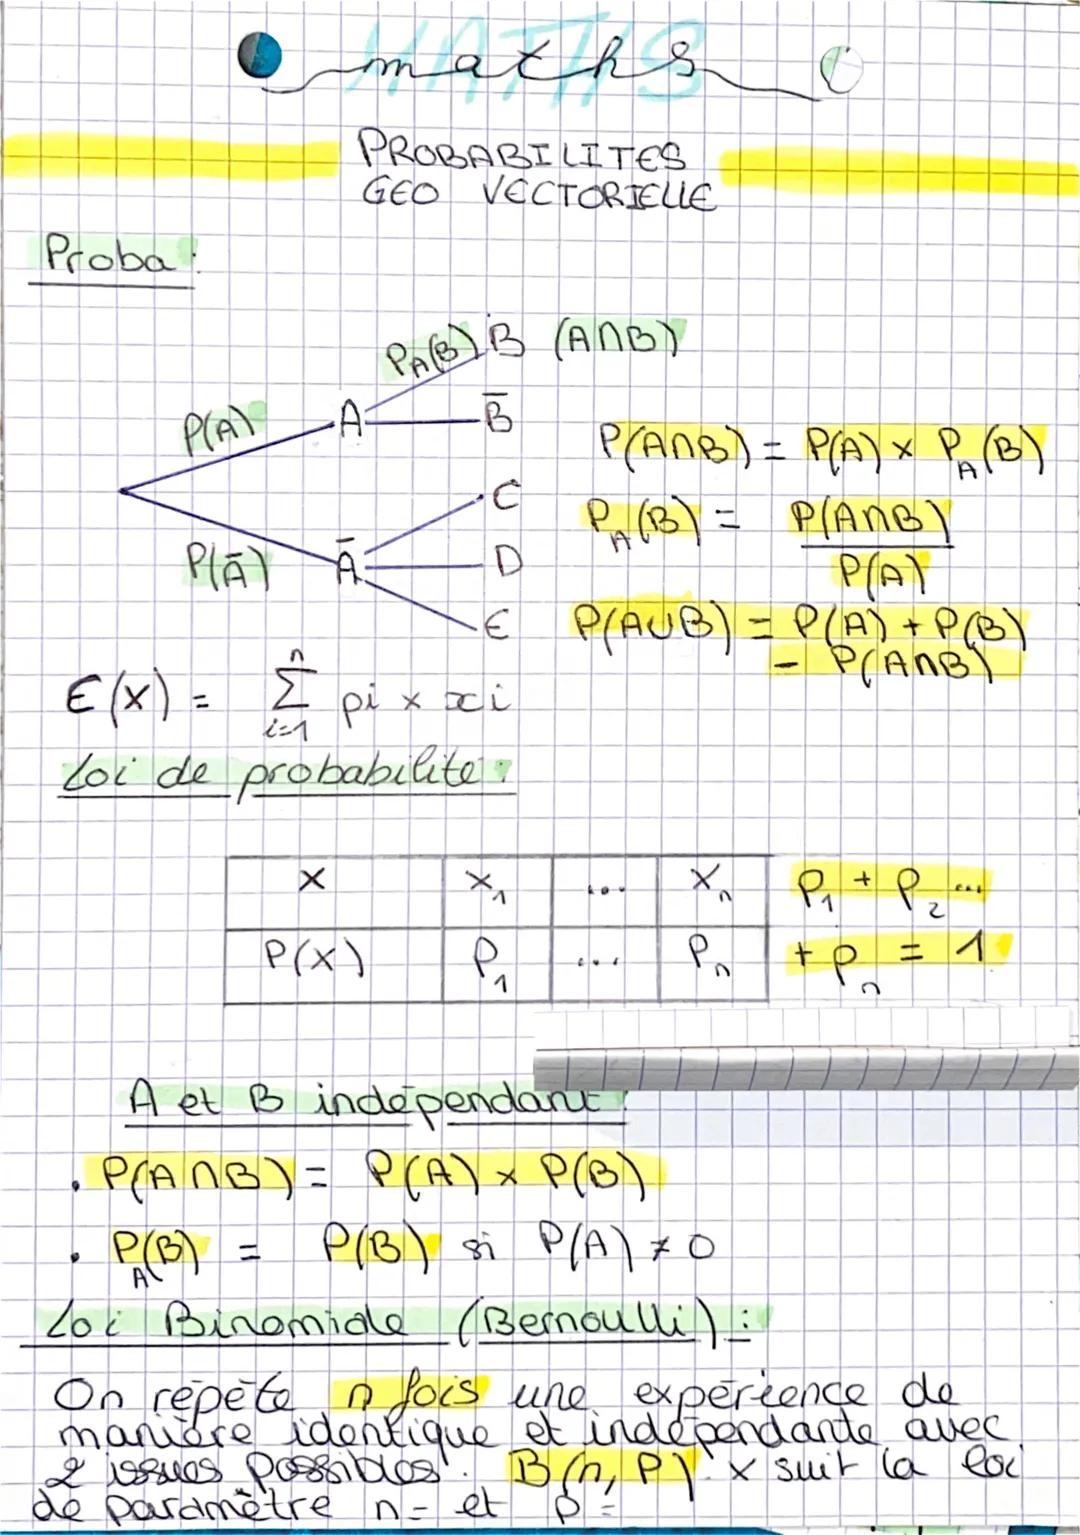 Proba!
P(A)
maths.
PROBABILITES
GEO VECTORIELLE
·A=
D
PLAY A
PAB)B (ANB)
-B
n
2 pi
Σ
i=1
-€
€(x) =
pi x xi
Loi de probabilite v
X
P(X)
H
с
D